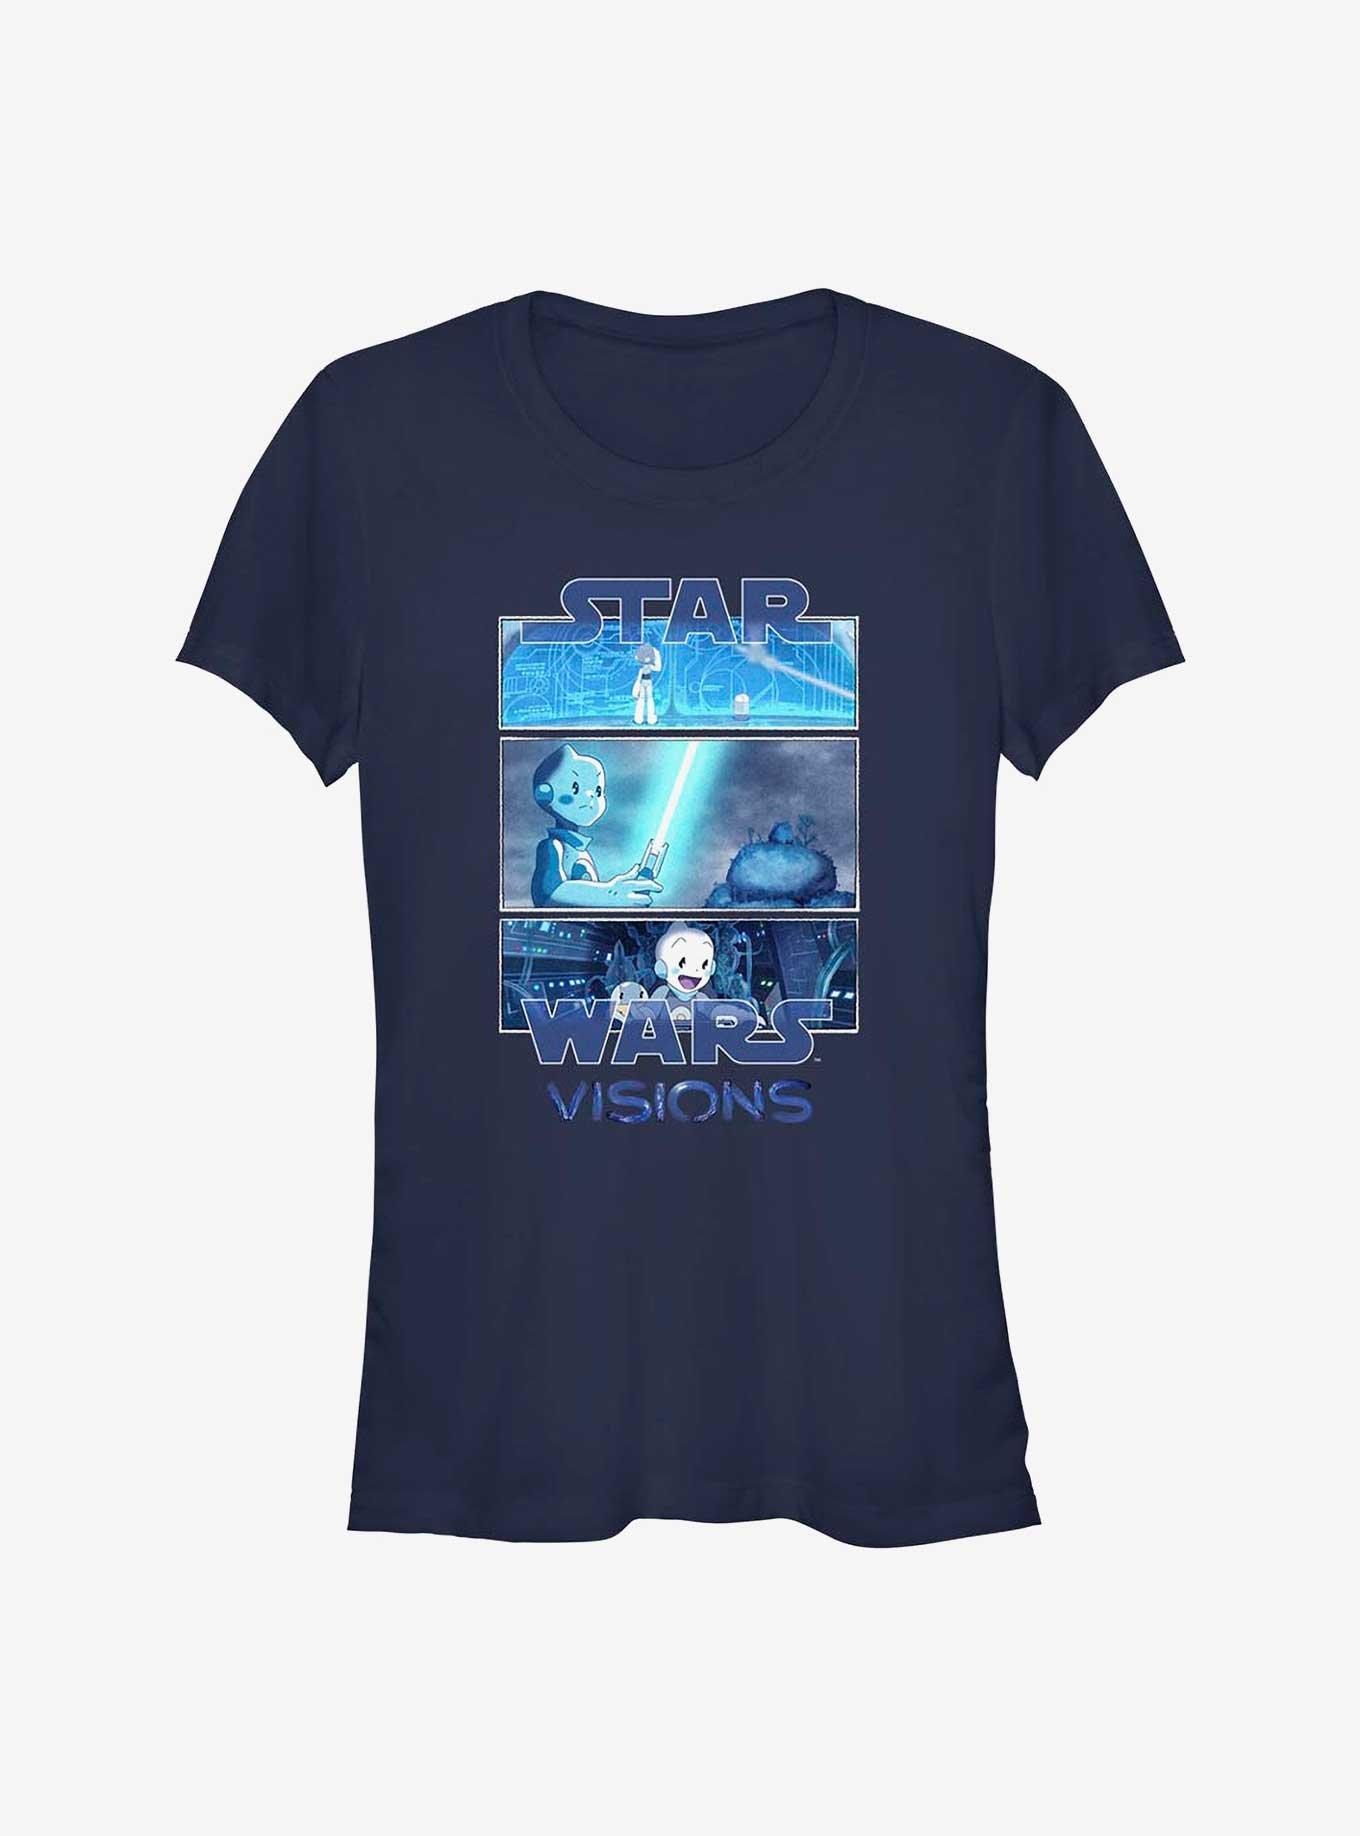 Star Wars: Visions T0-B1 Tri Panel Girls T-Shirt